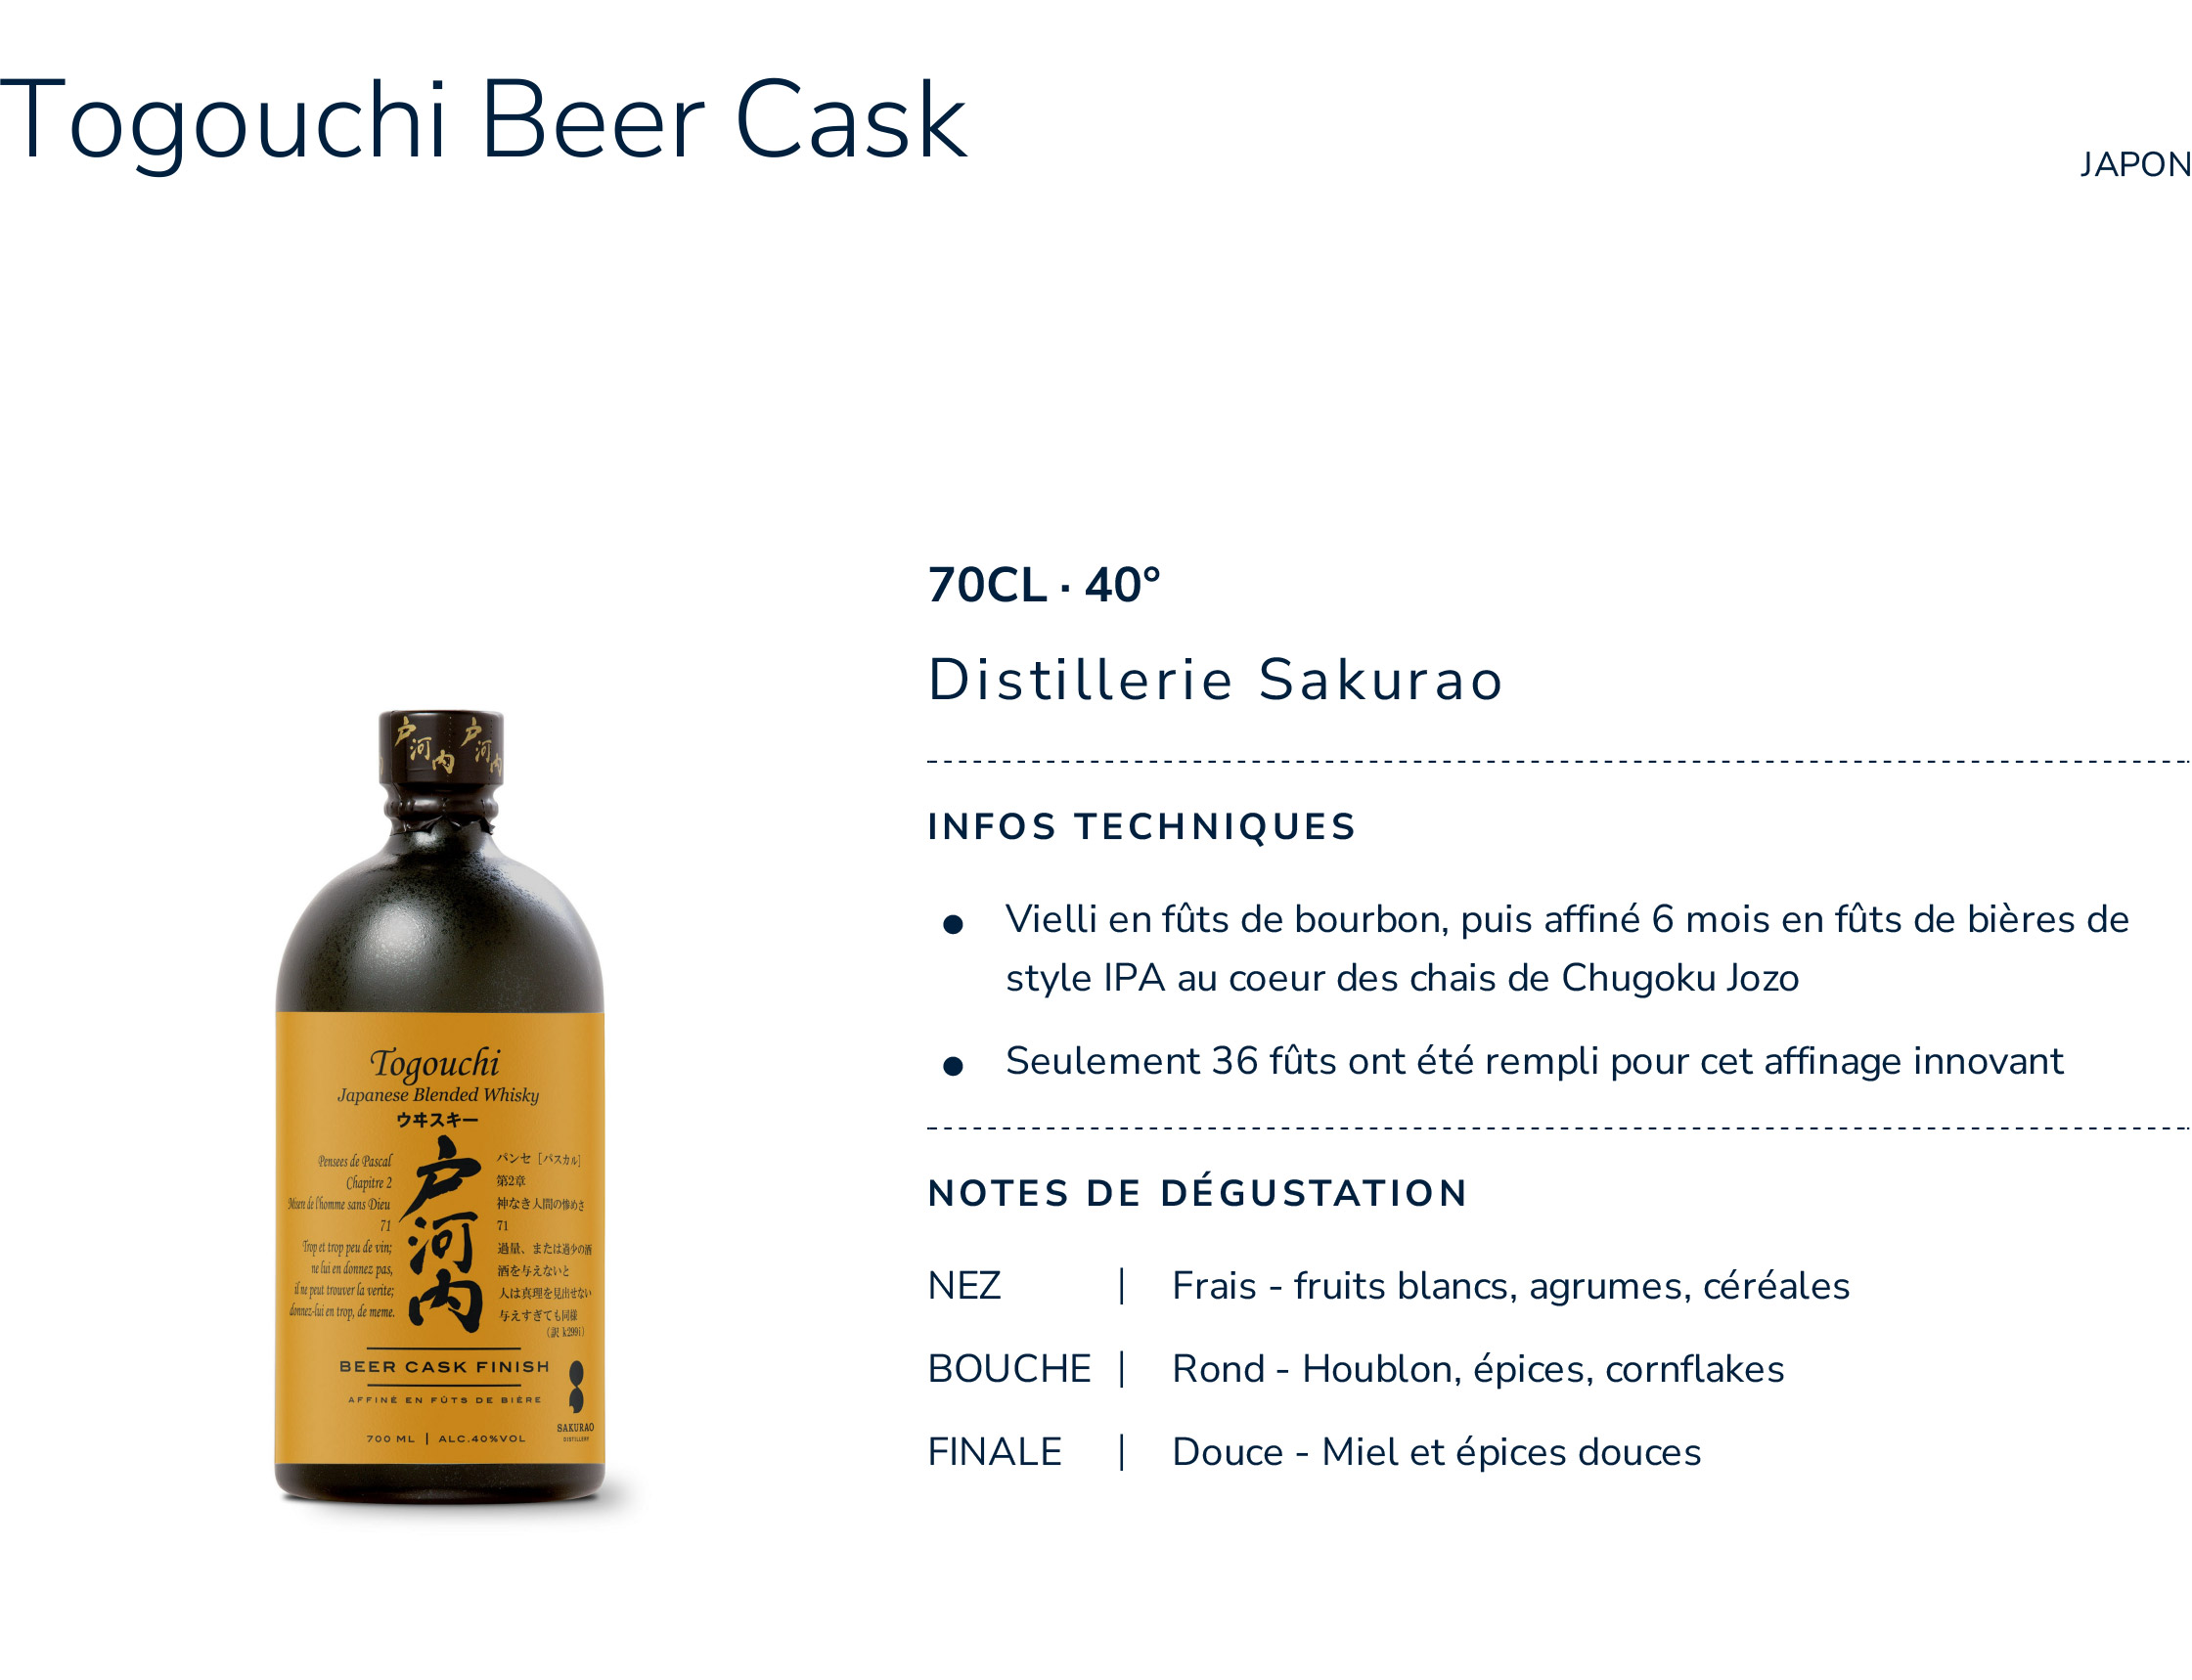 Togouchi Beer Cask Finish Whisky